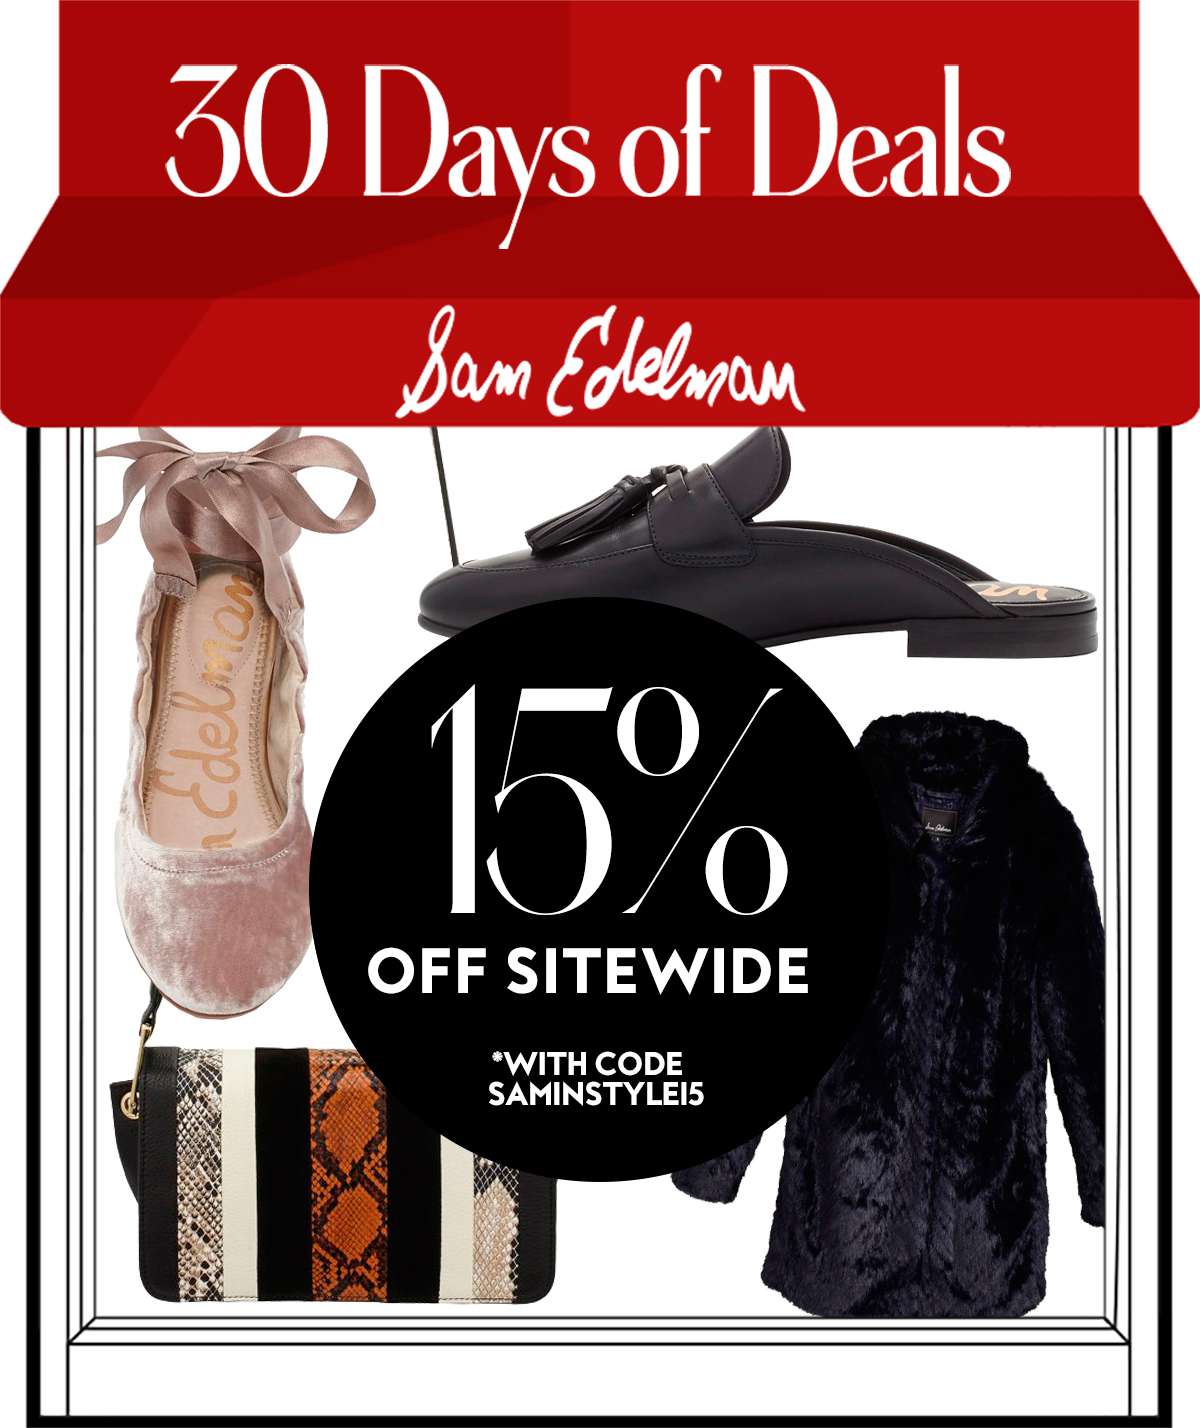 30 Days of Deals - Sam Edelman LEAD